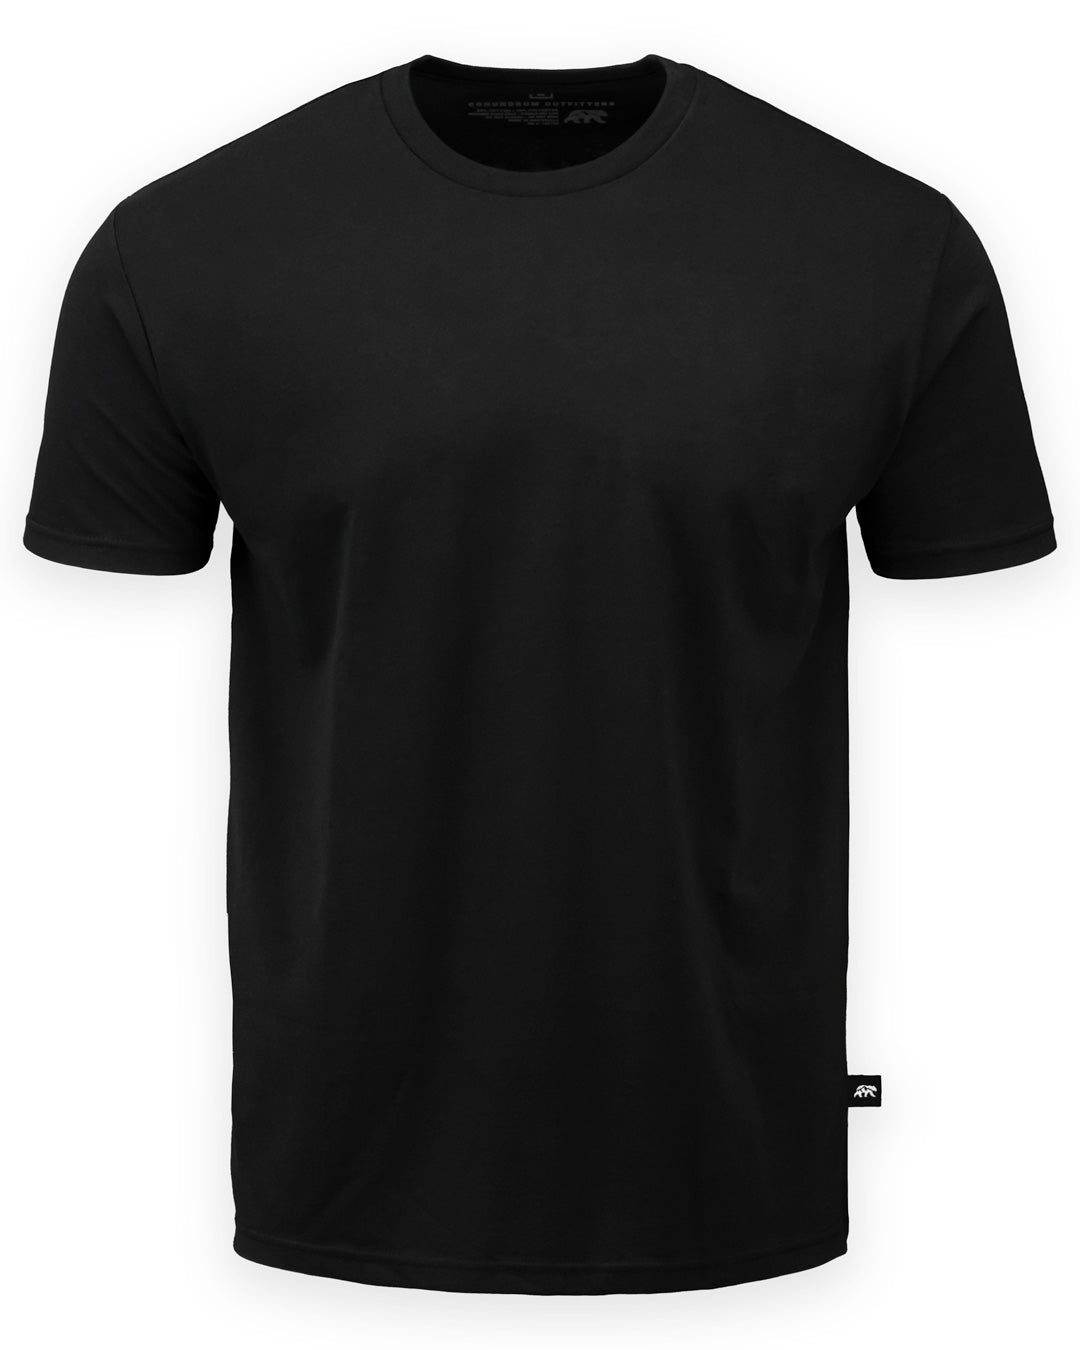 EDC Premium Short Sleeve - Black